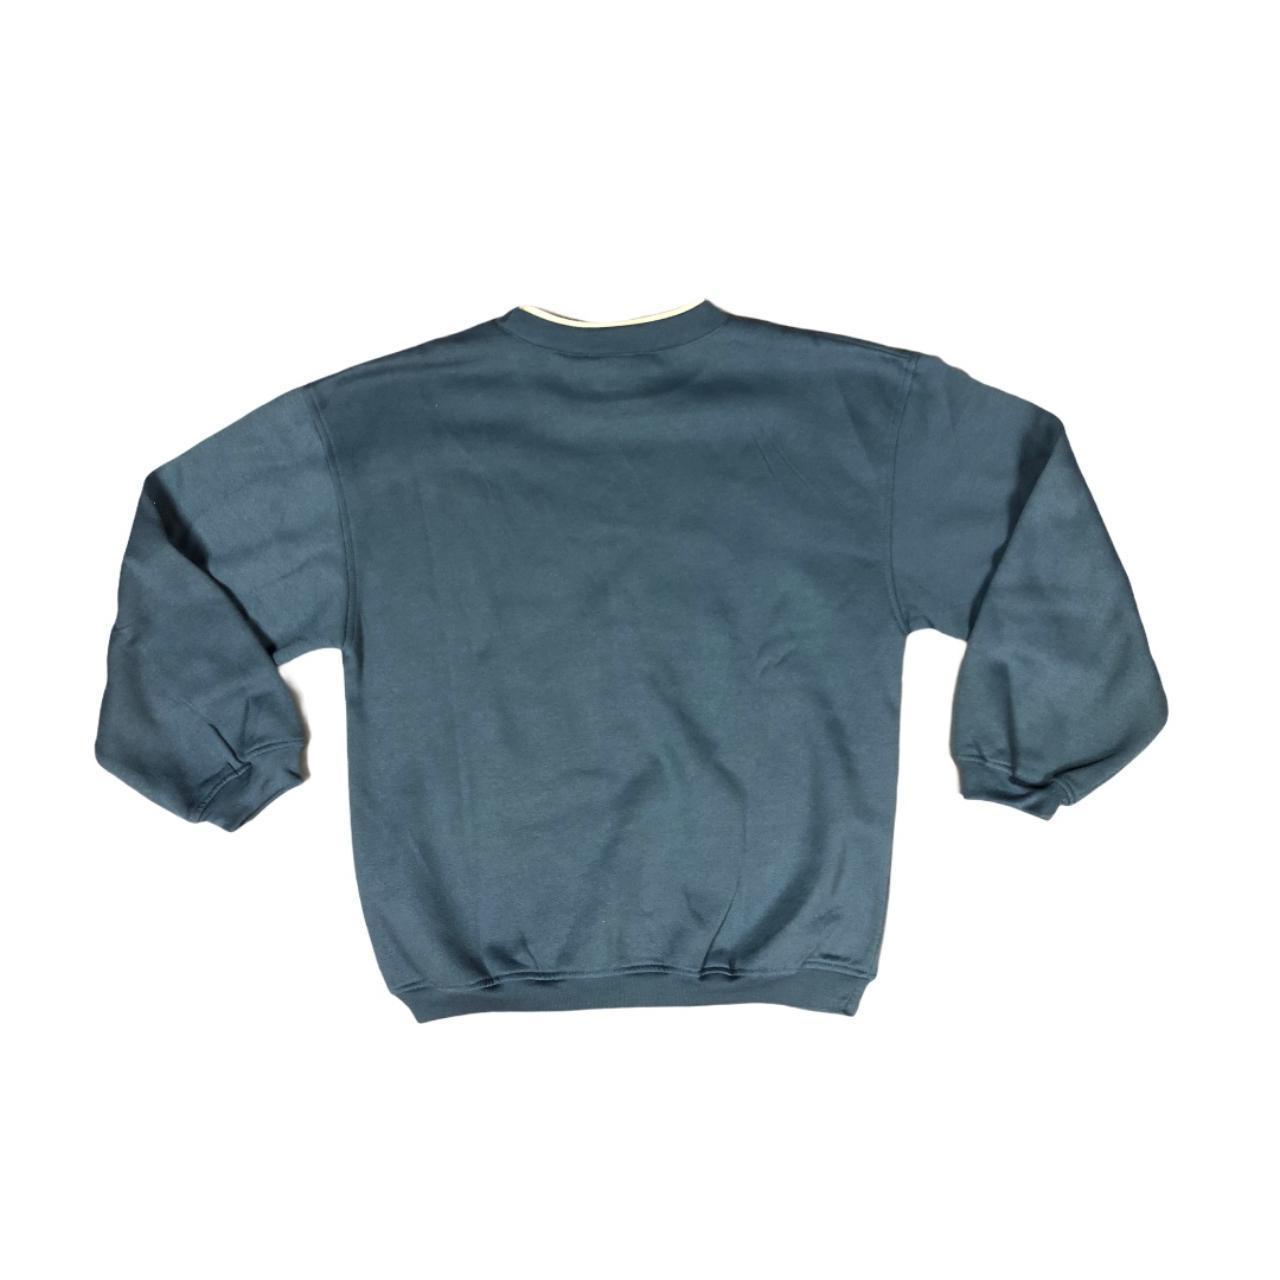 Product Image 4 - Grandma sweater crewneck in a